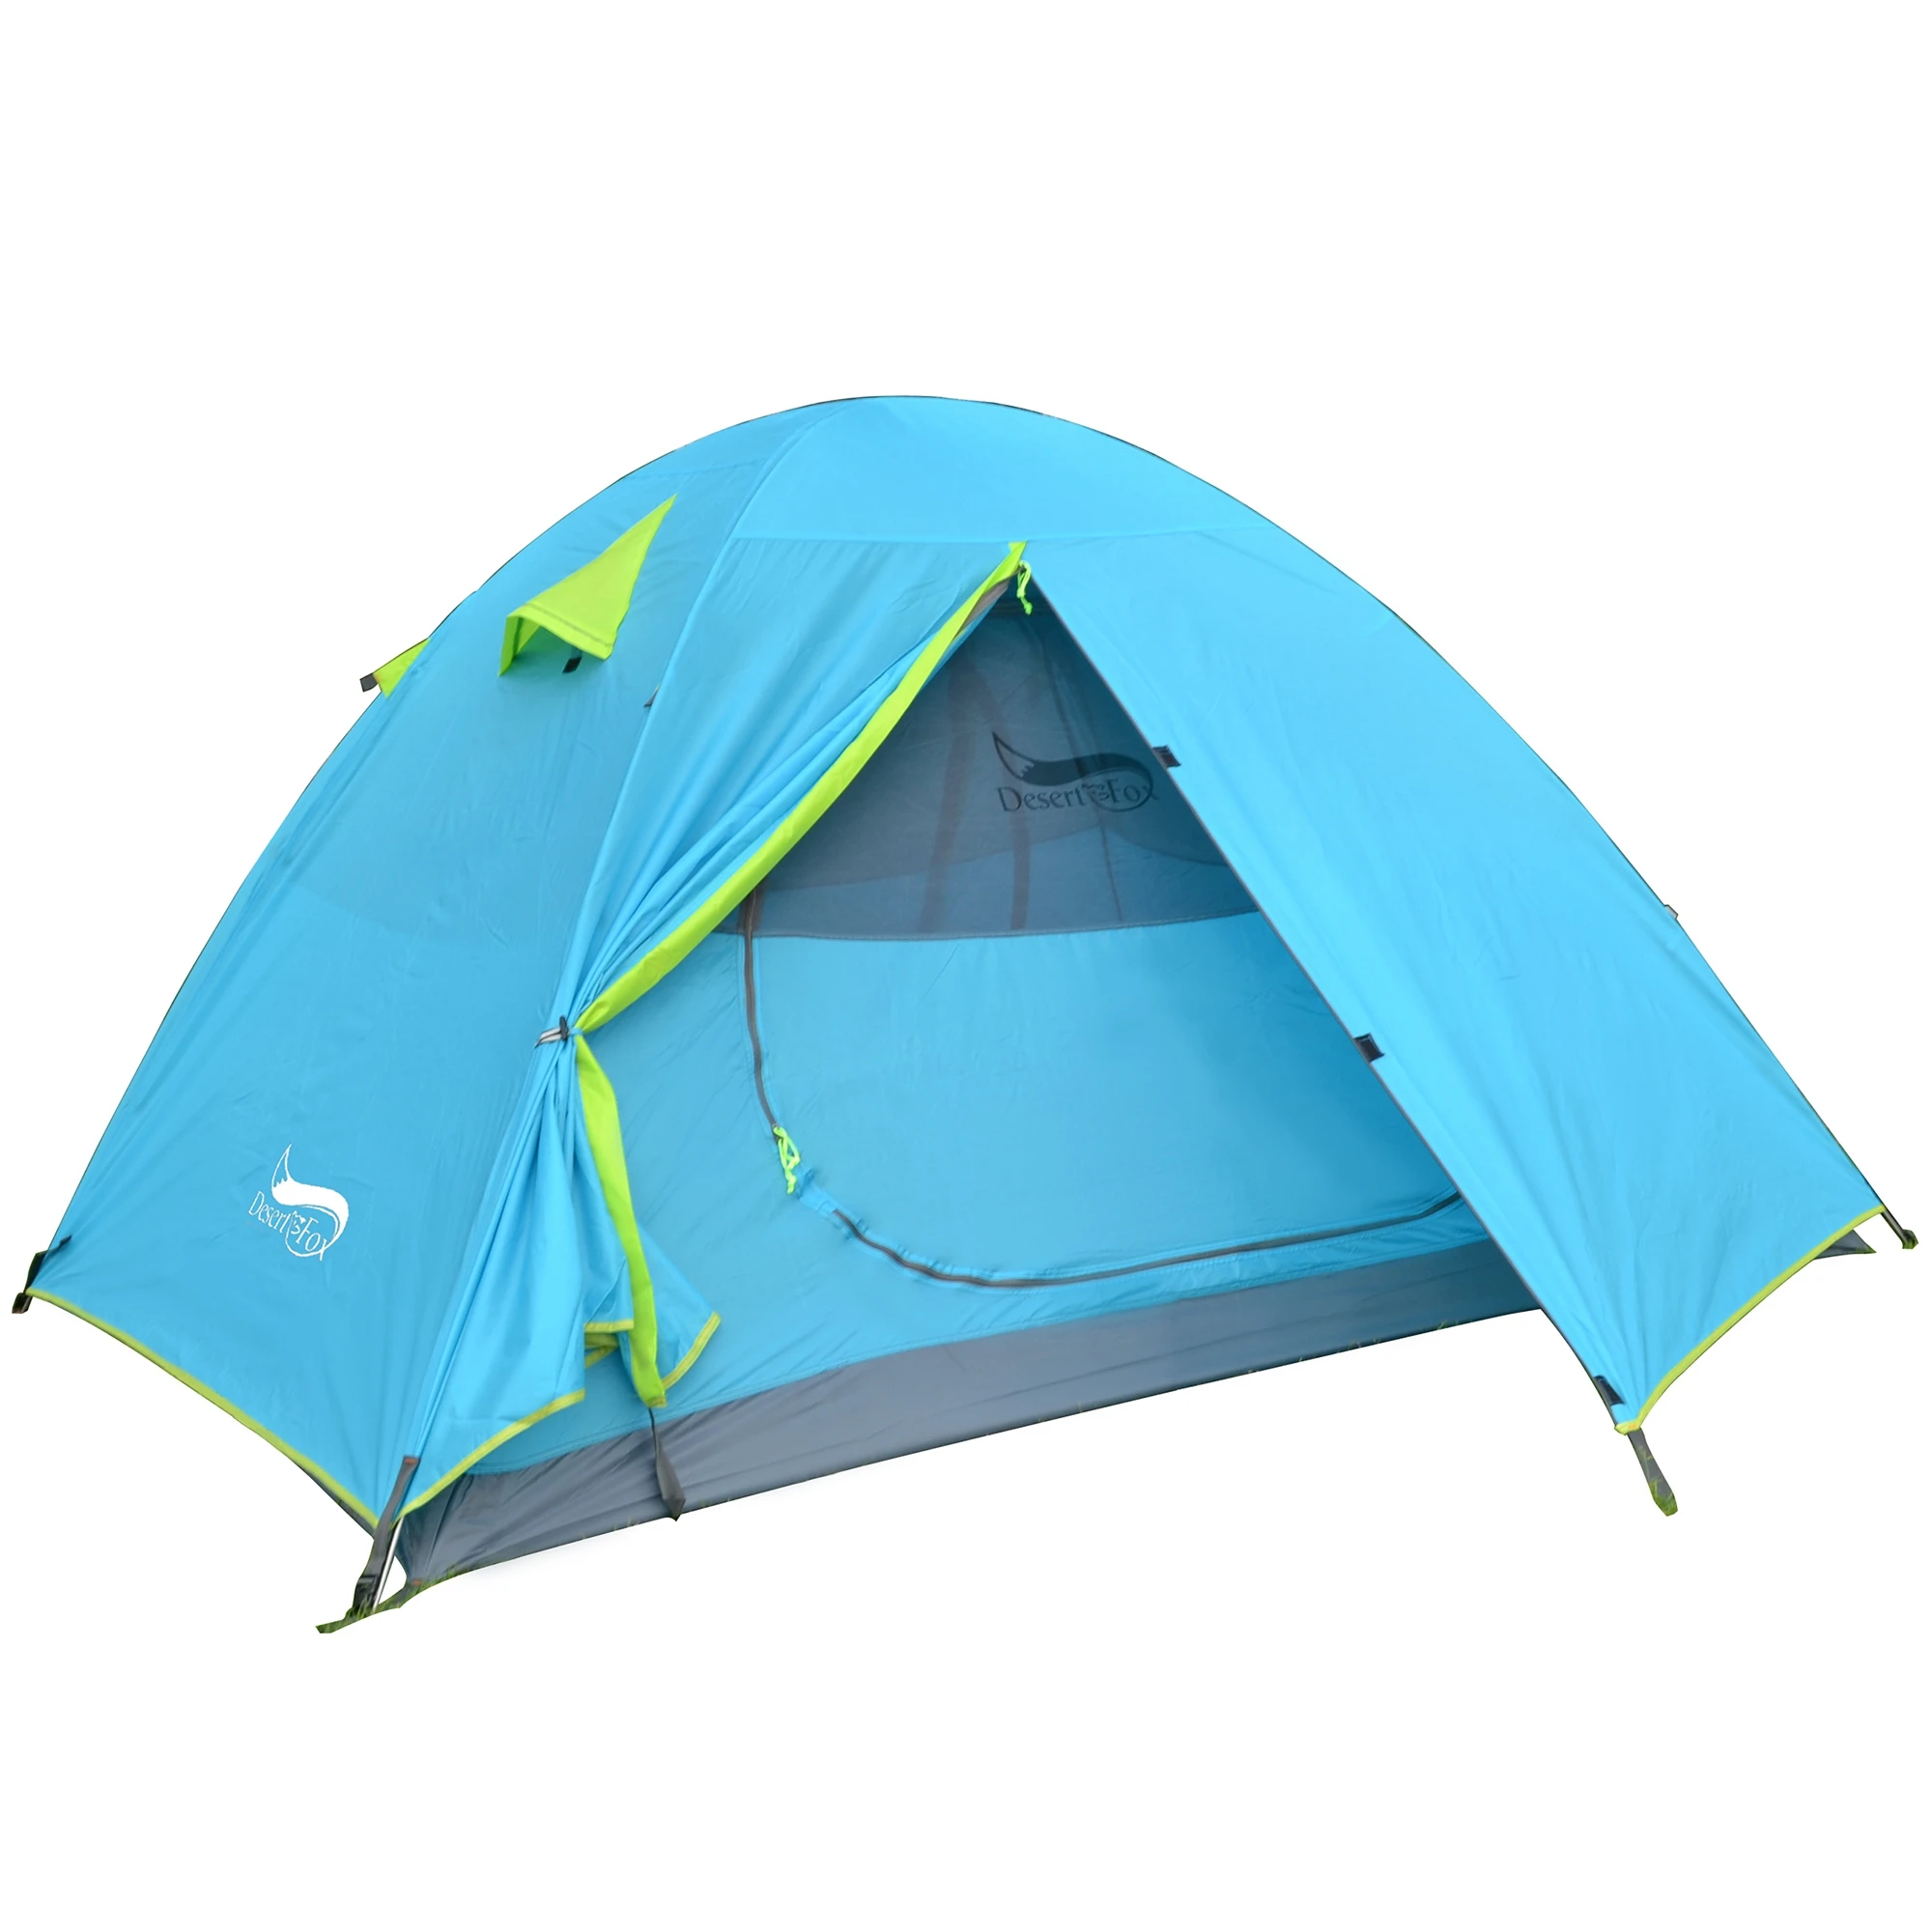 2 person tent blue